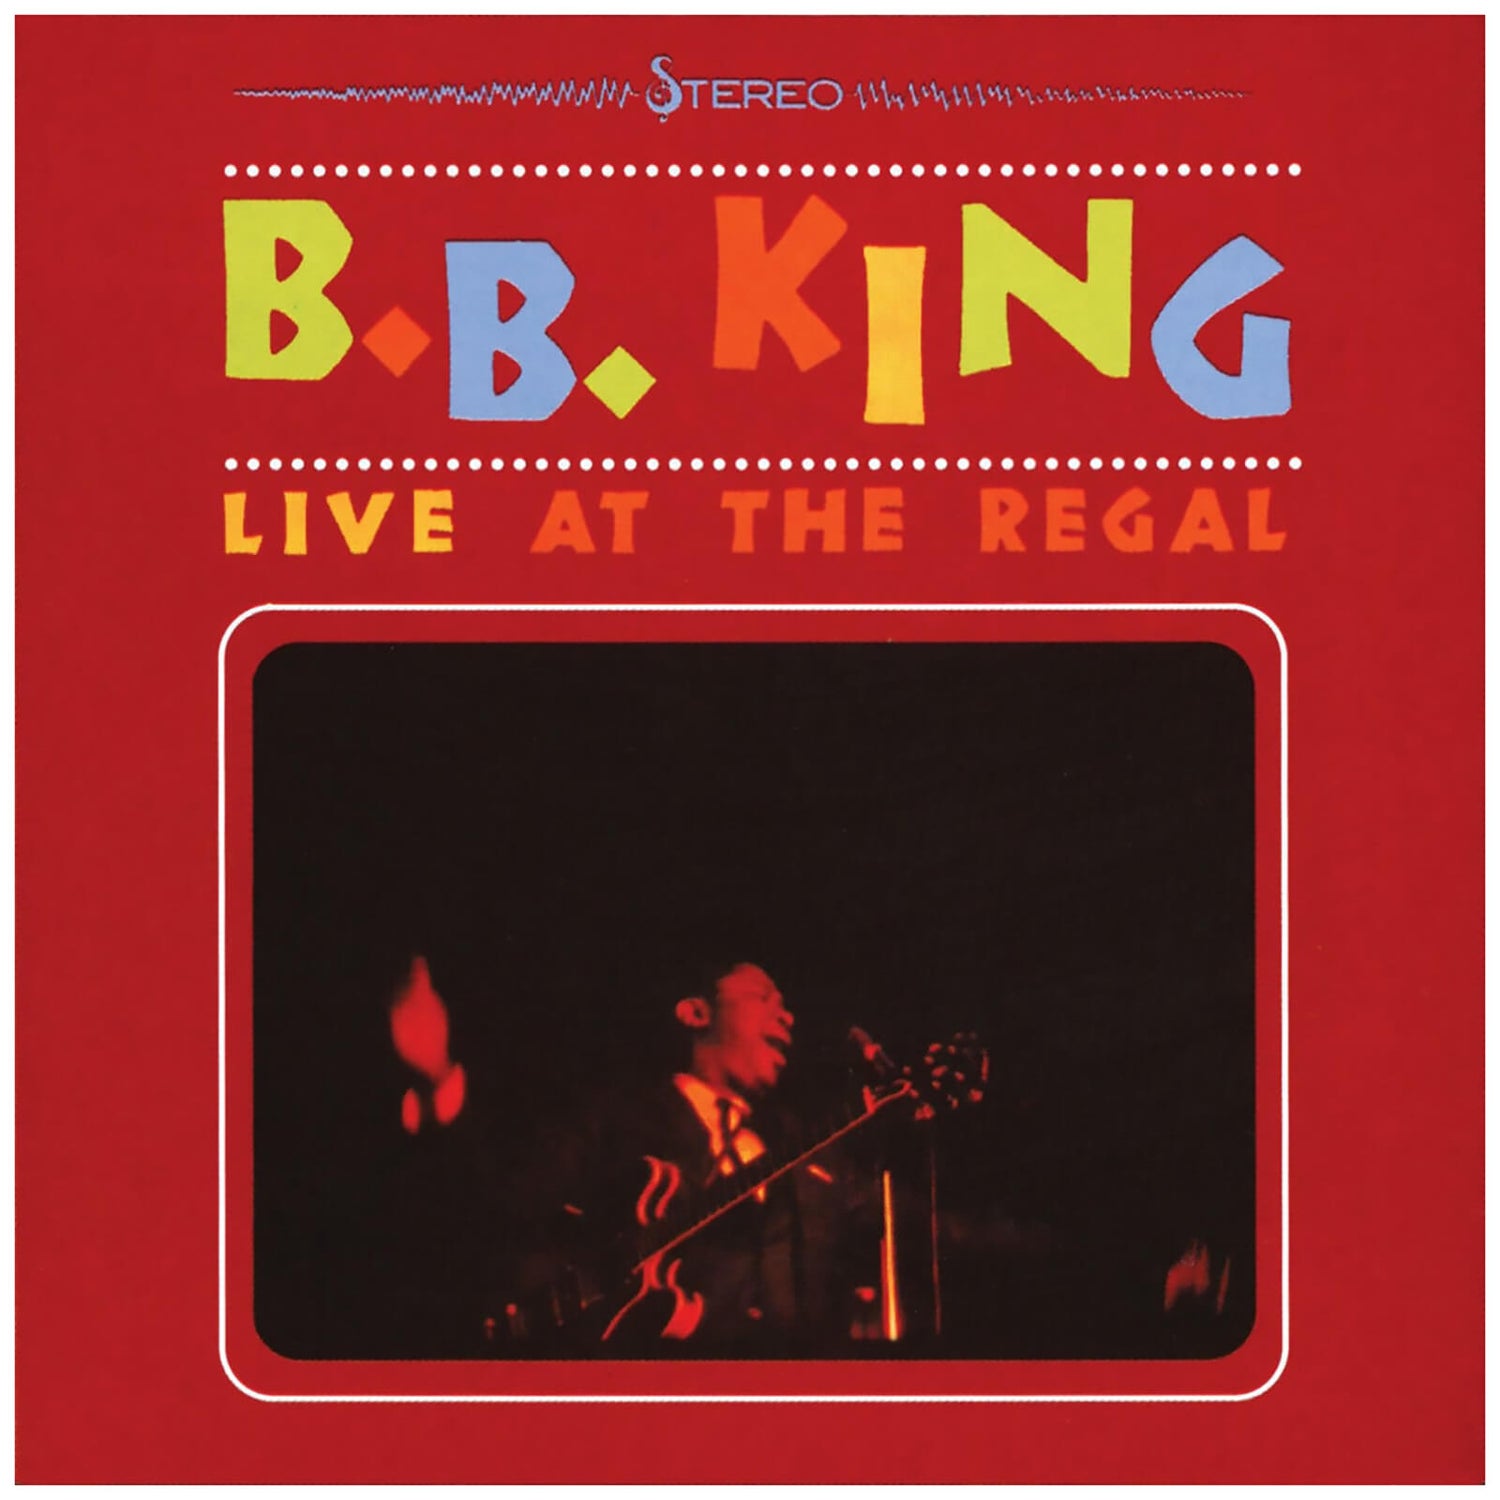 B.B. King - Live At The Regal - Vinyl